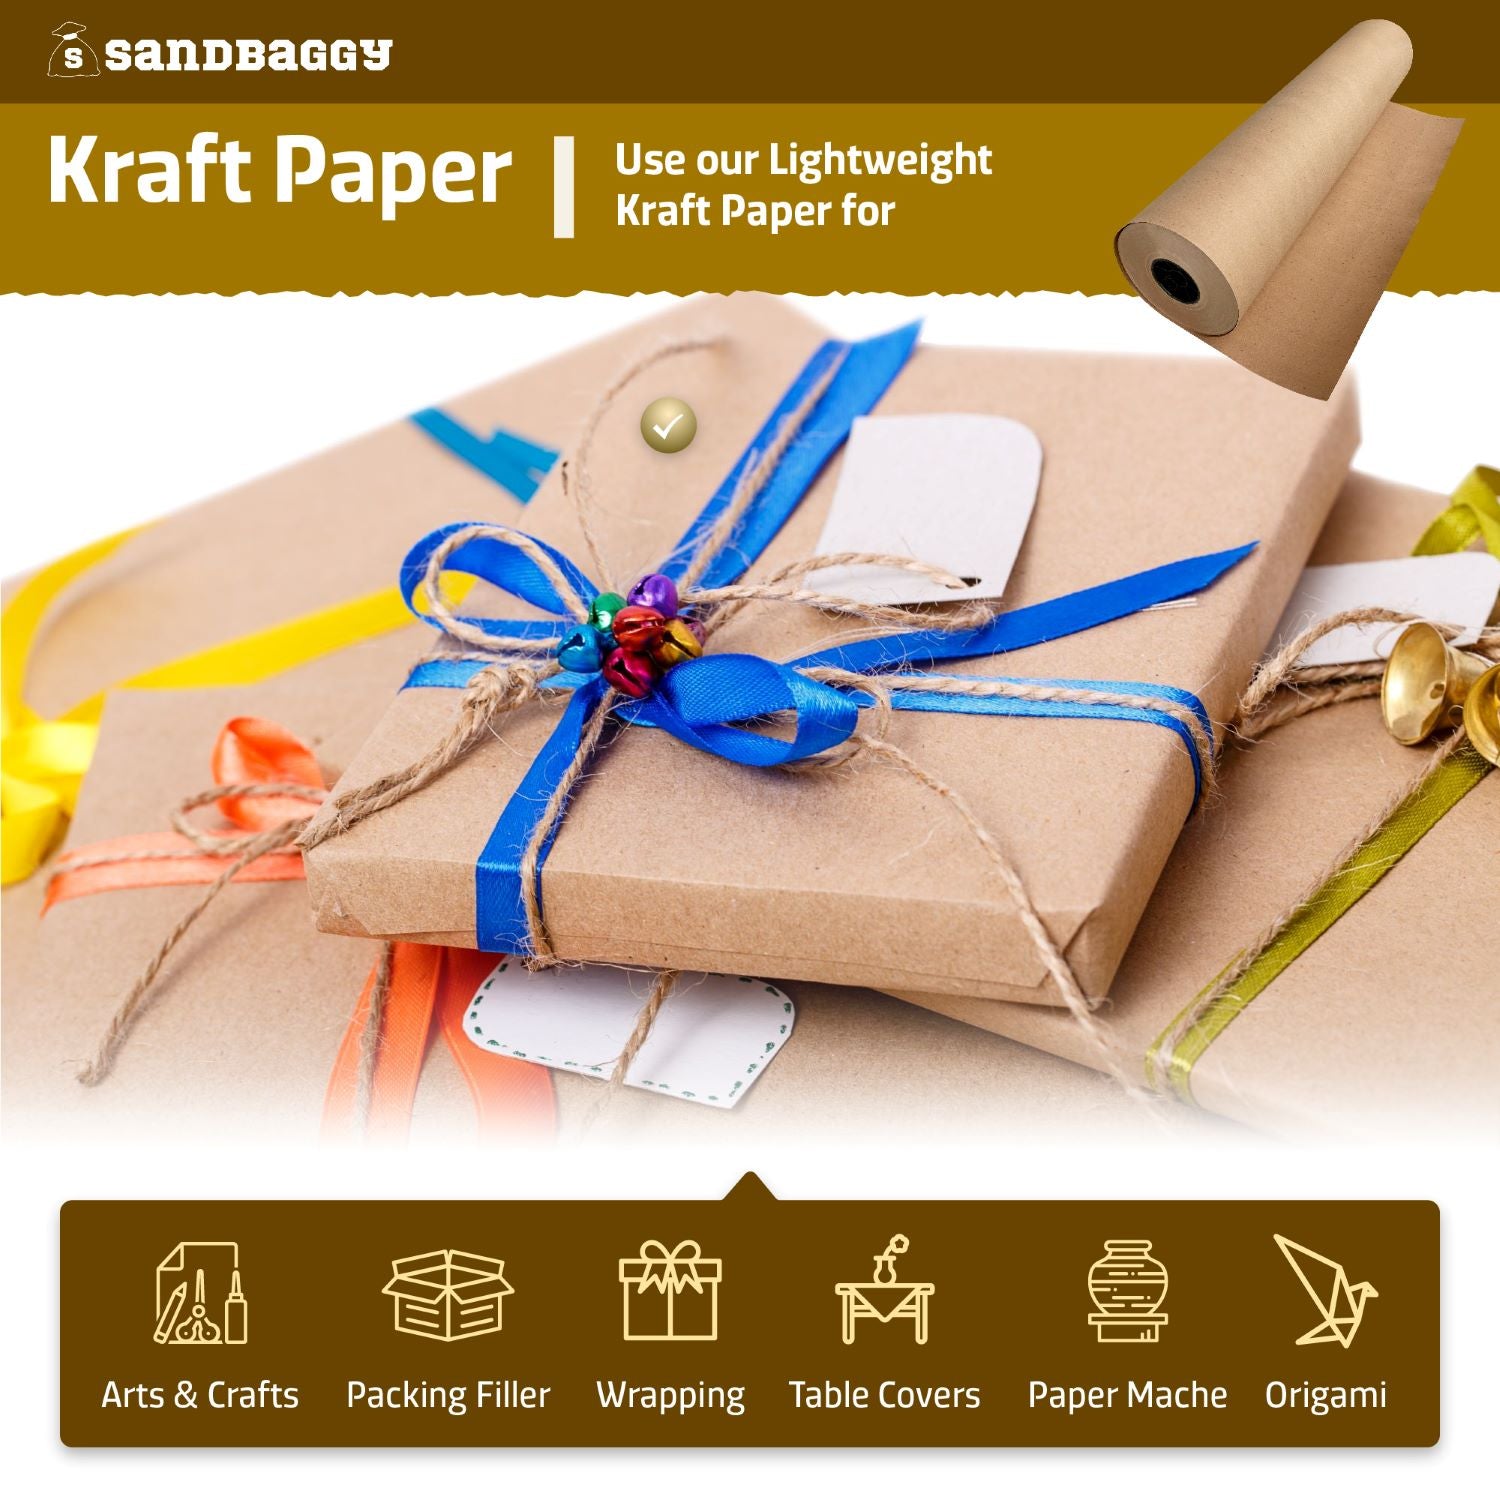 36 - 50 lb. Kraft Paper Rolls